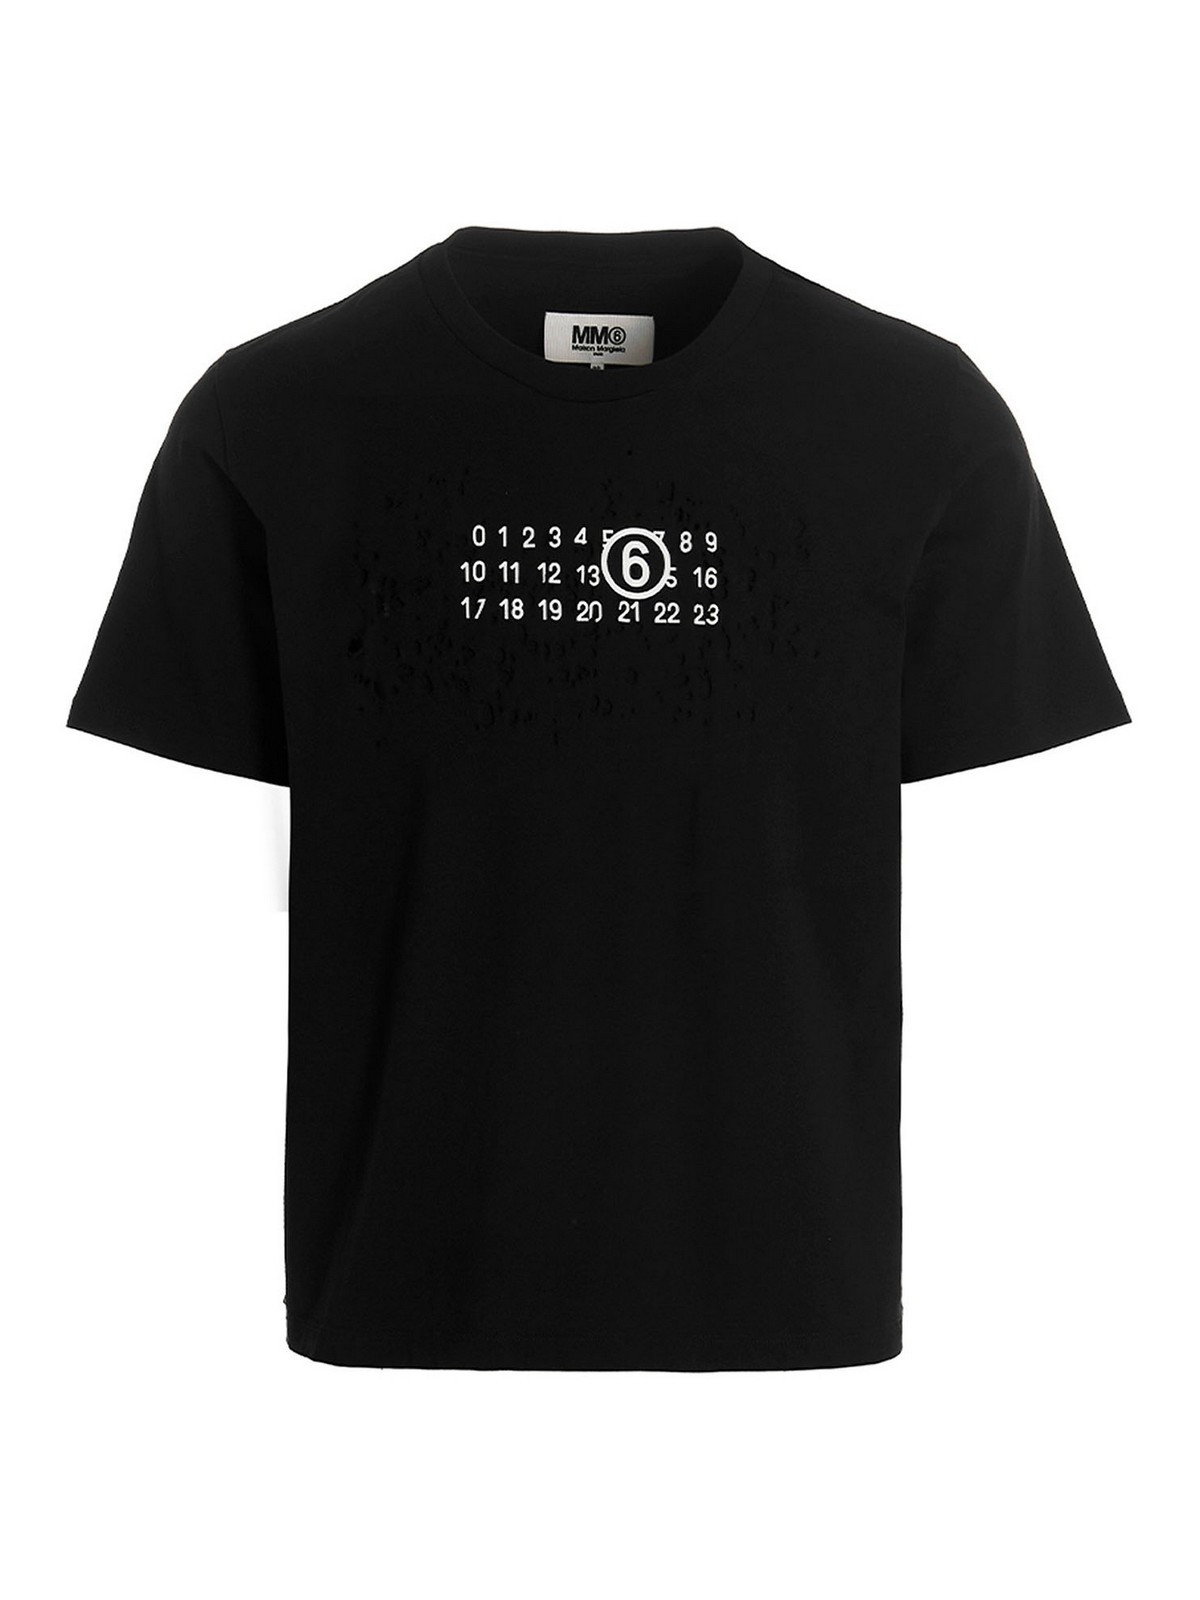 Tシャツ MM6 Maison Margiela - Tシャツ - 黒 - S62GD0156S23588900